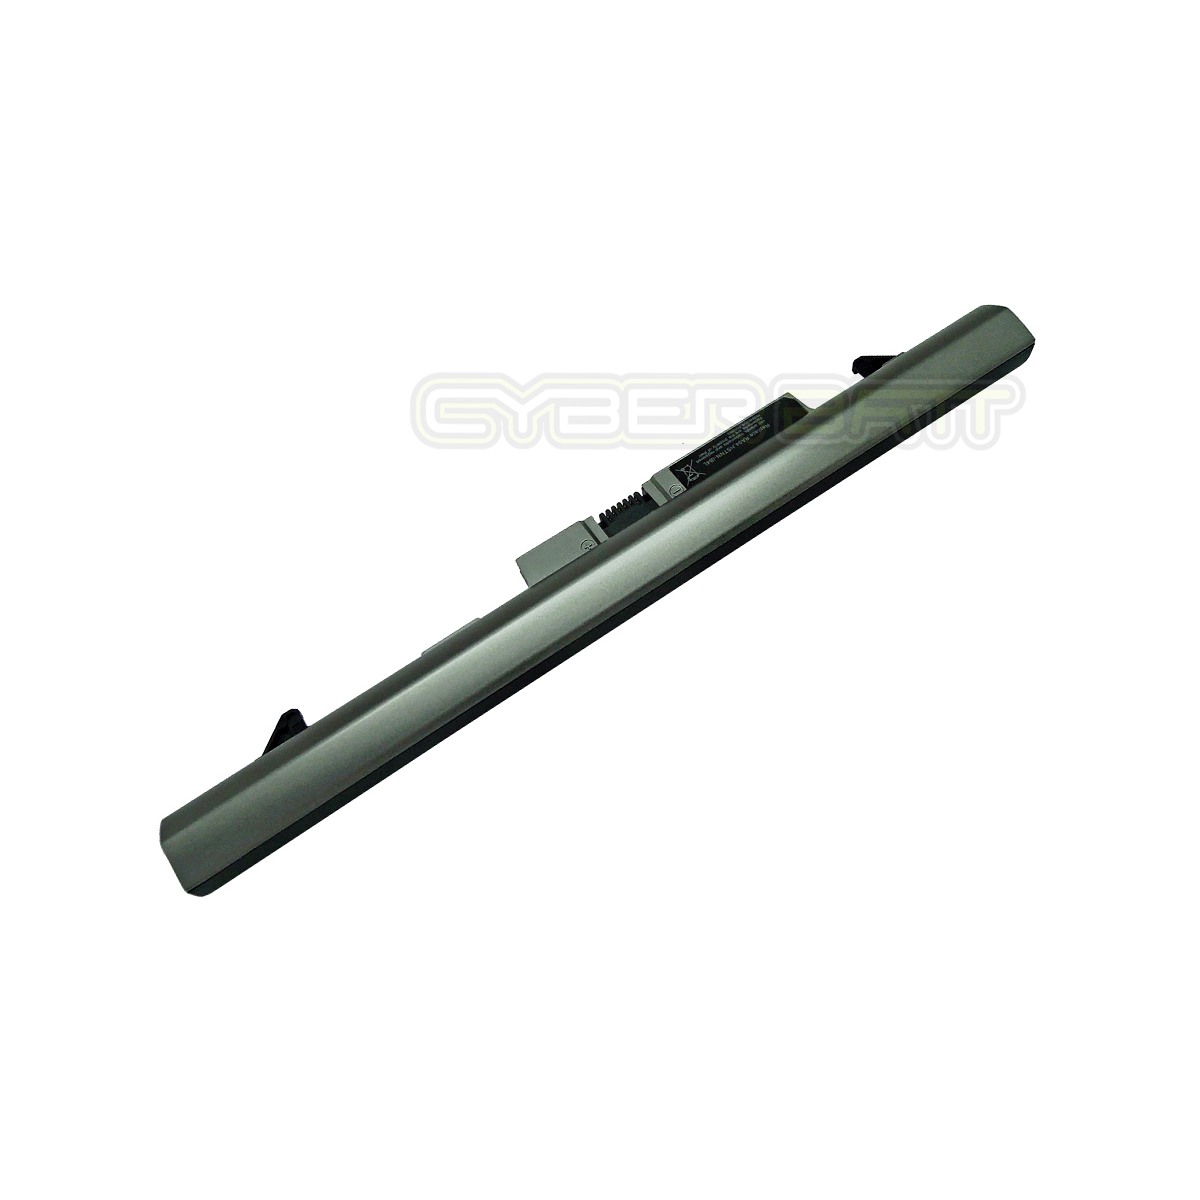 Battery HP ProBook 430 RA04 : 14.8V-2200mAh Black with Metallic Grey (CYBERBATT)